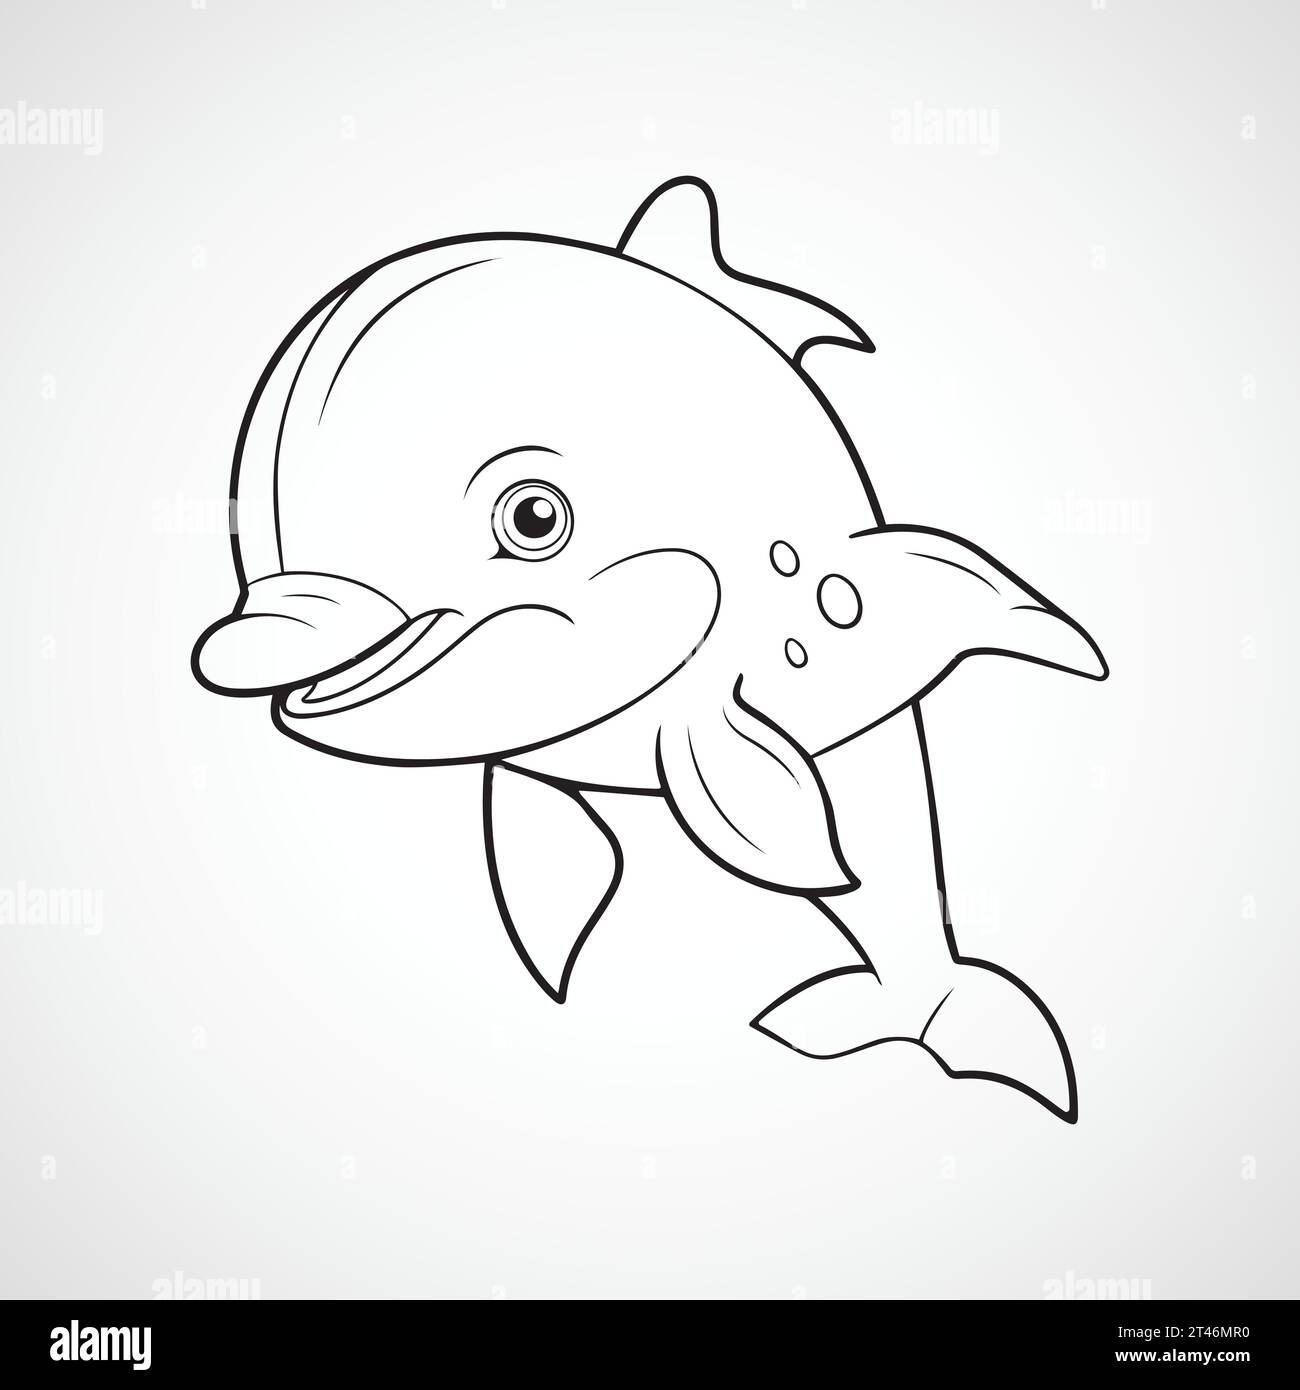 Stock Art Drawing of a Bottlenose Dolphin - inkart